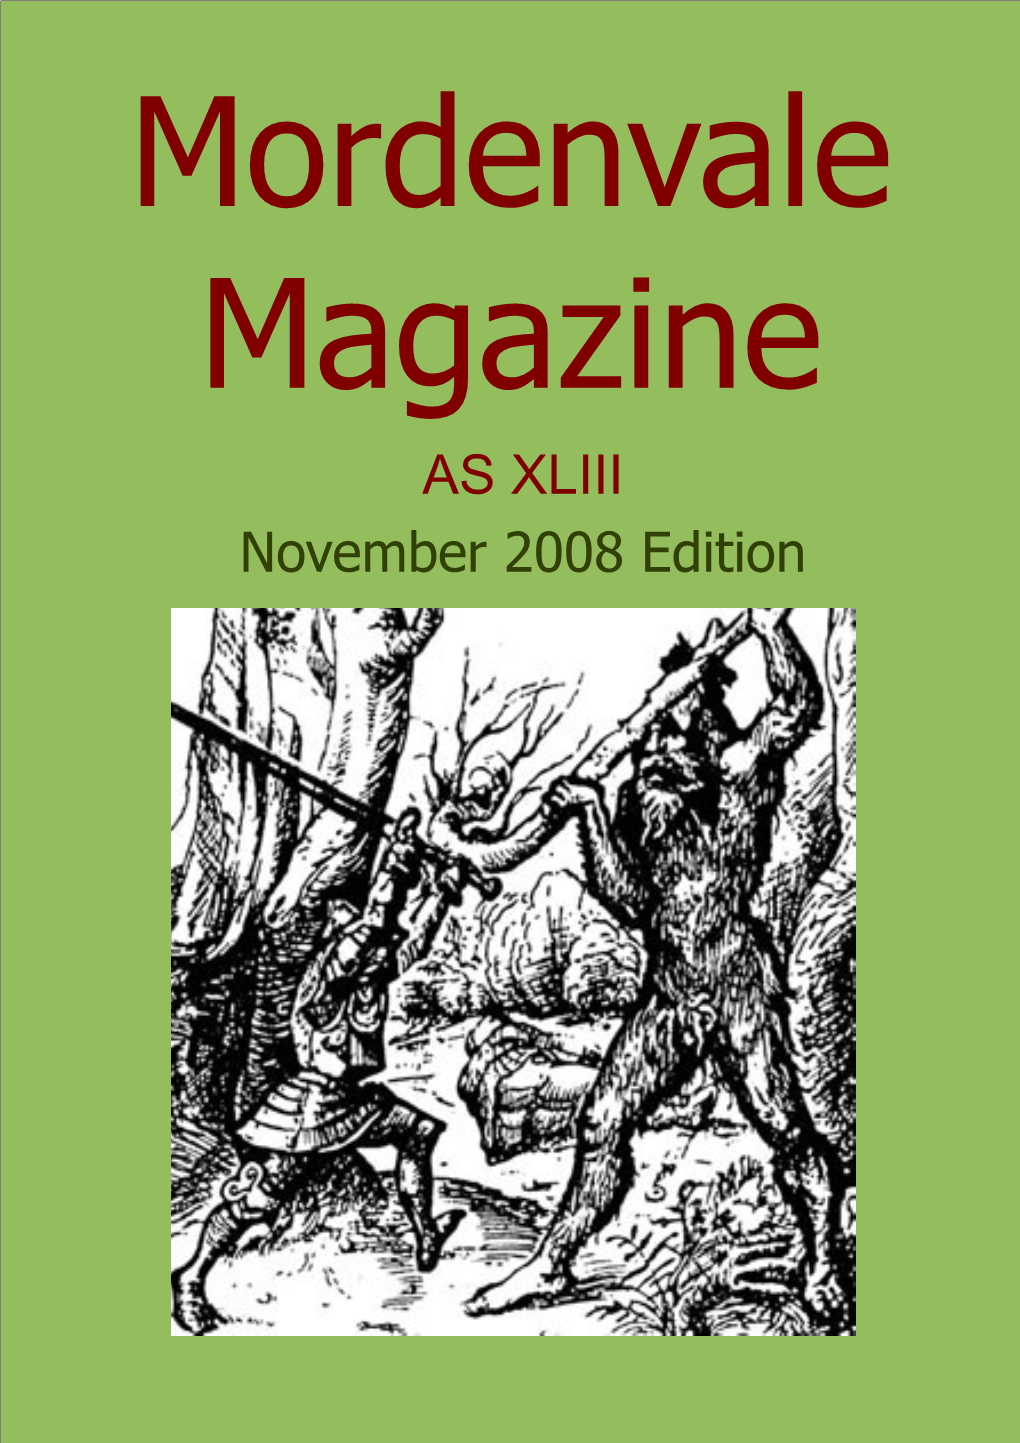 AS XLIII November 2008 Edition Contents Contents